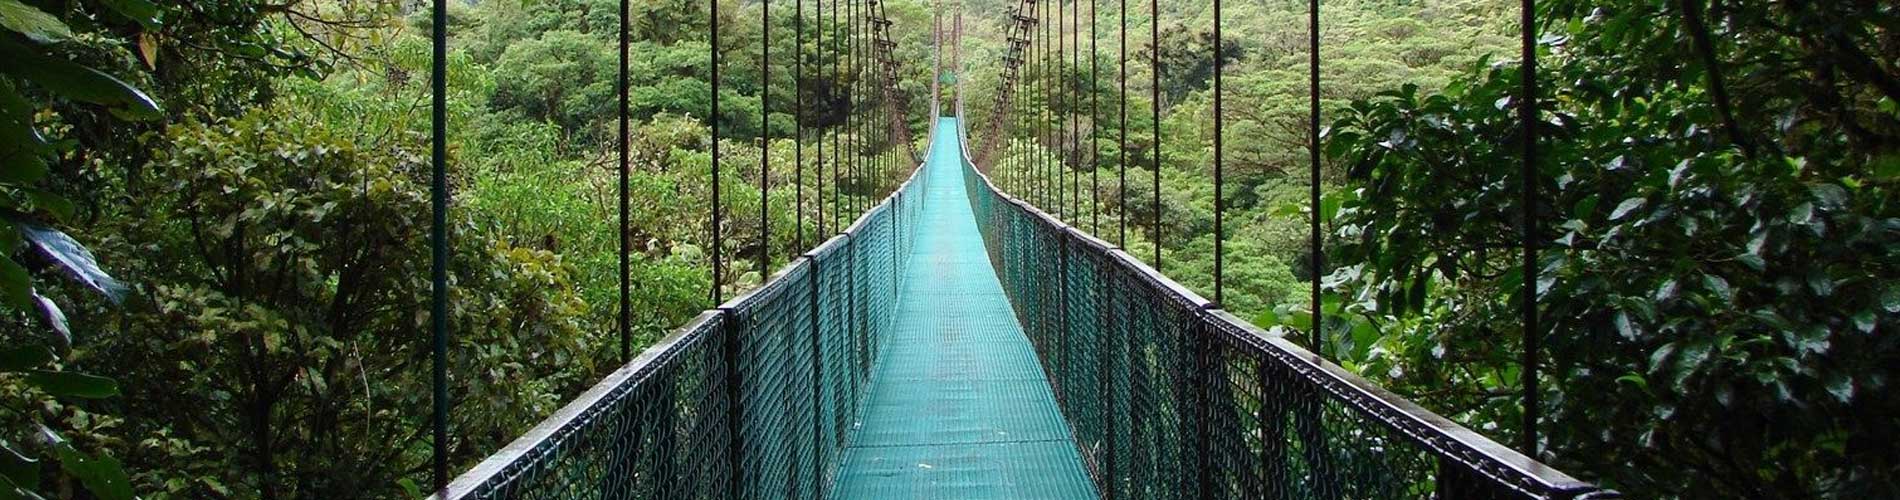 Hanging Bridges cloud forest - Witropa Travel